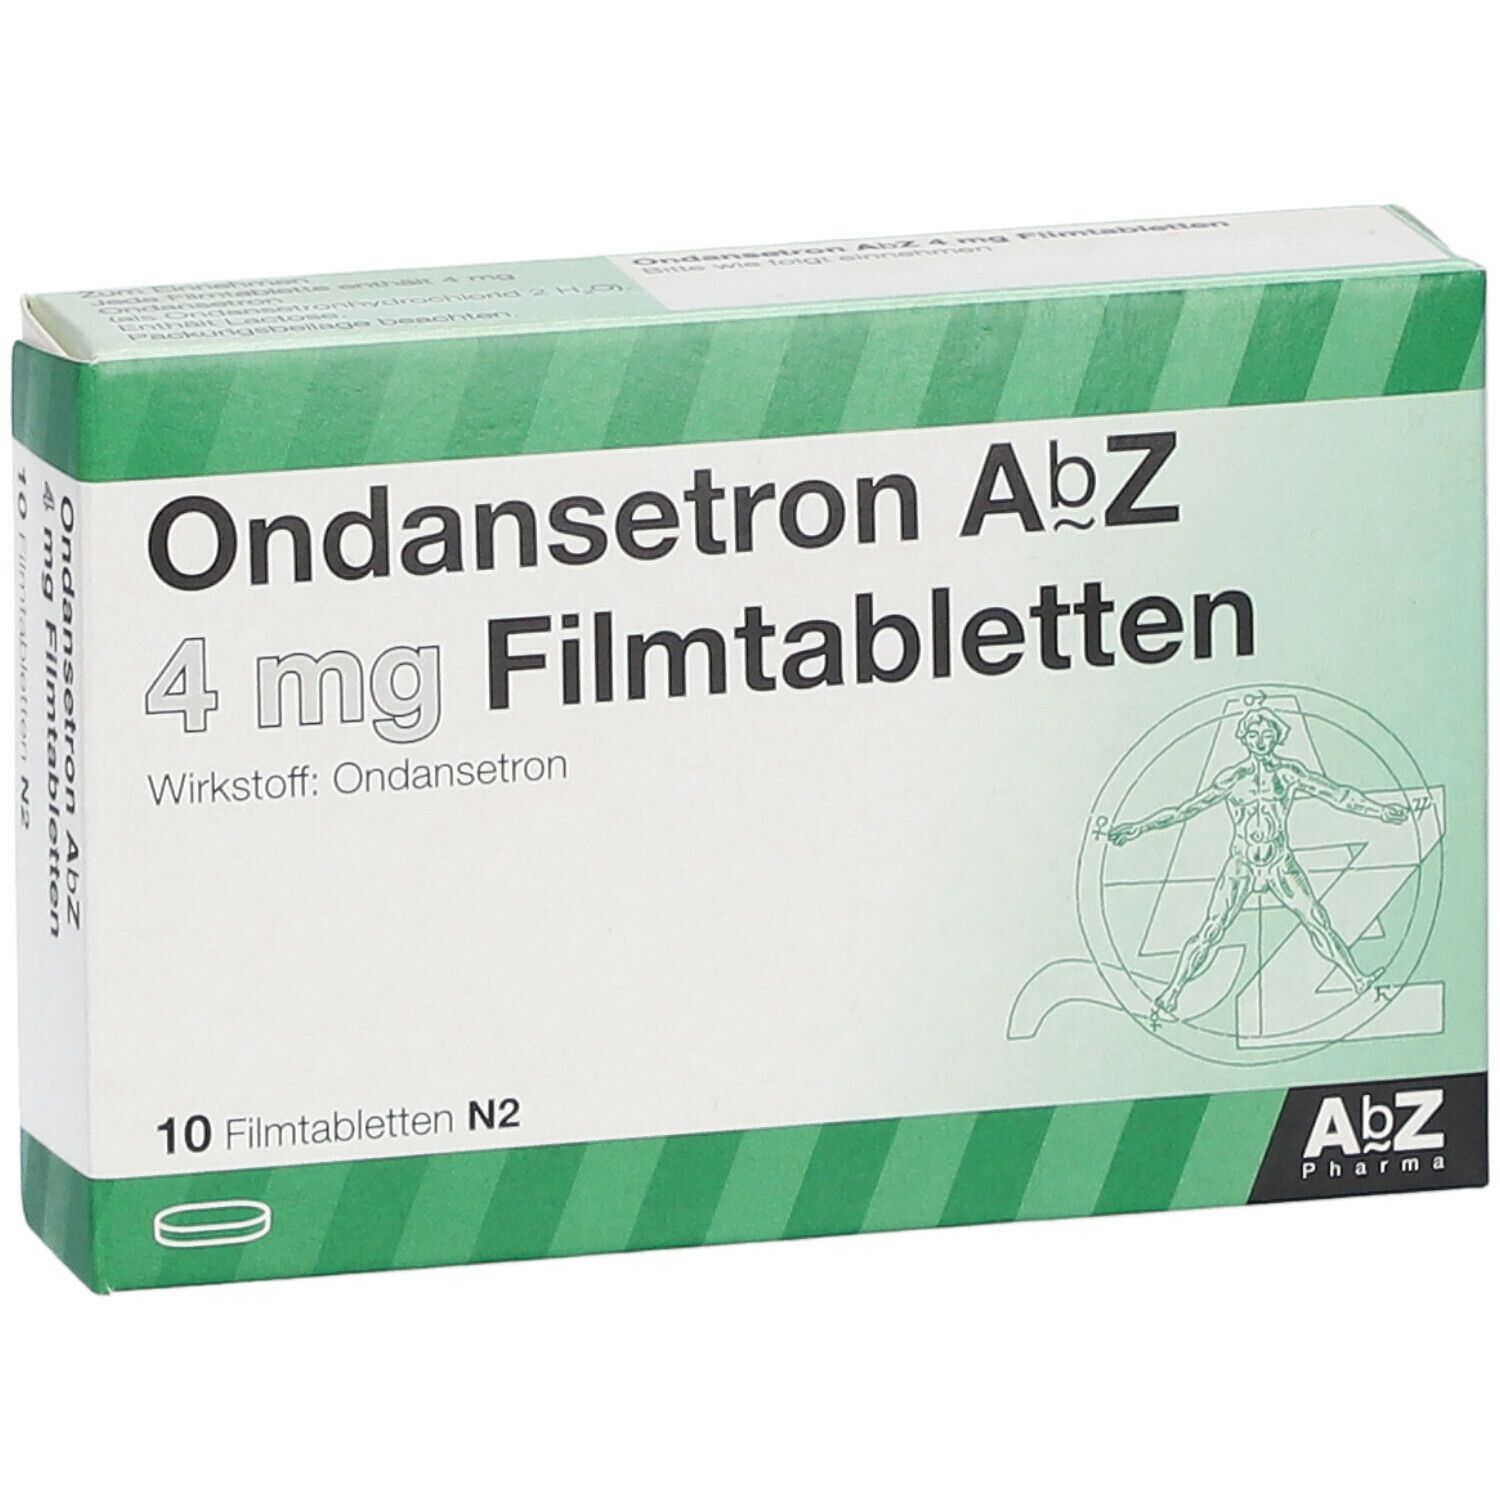 Ondansetron AbZ 4 mg